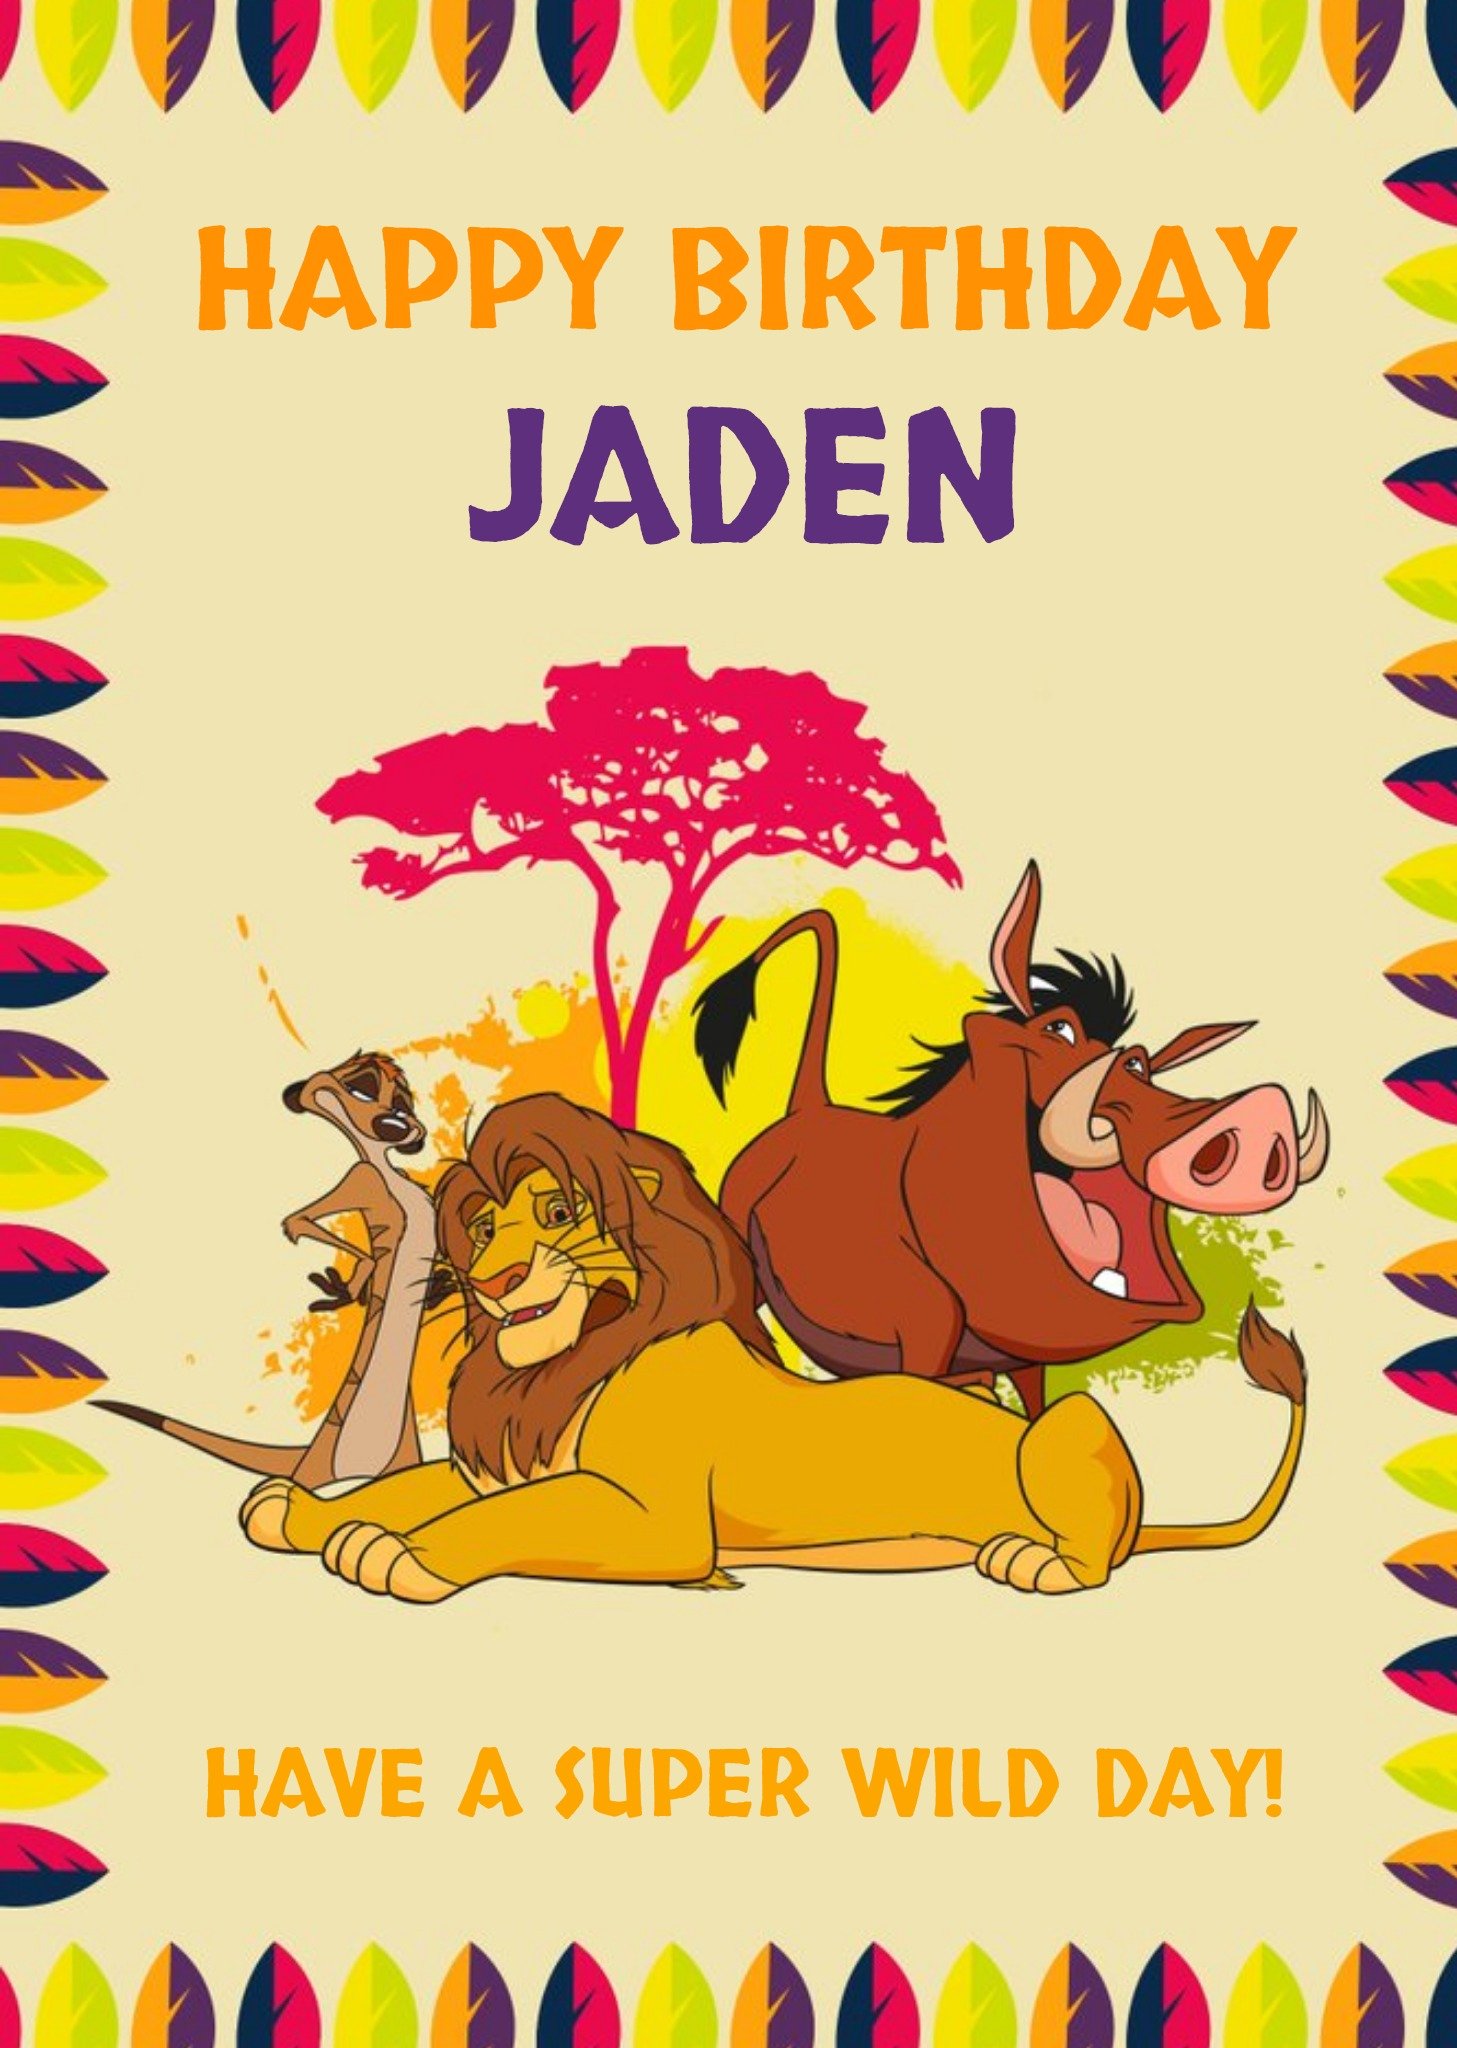 Disney Lion King Happy Birthday Card - Have A Super Wild Day Ecard